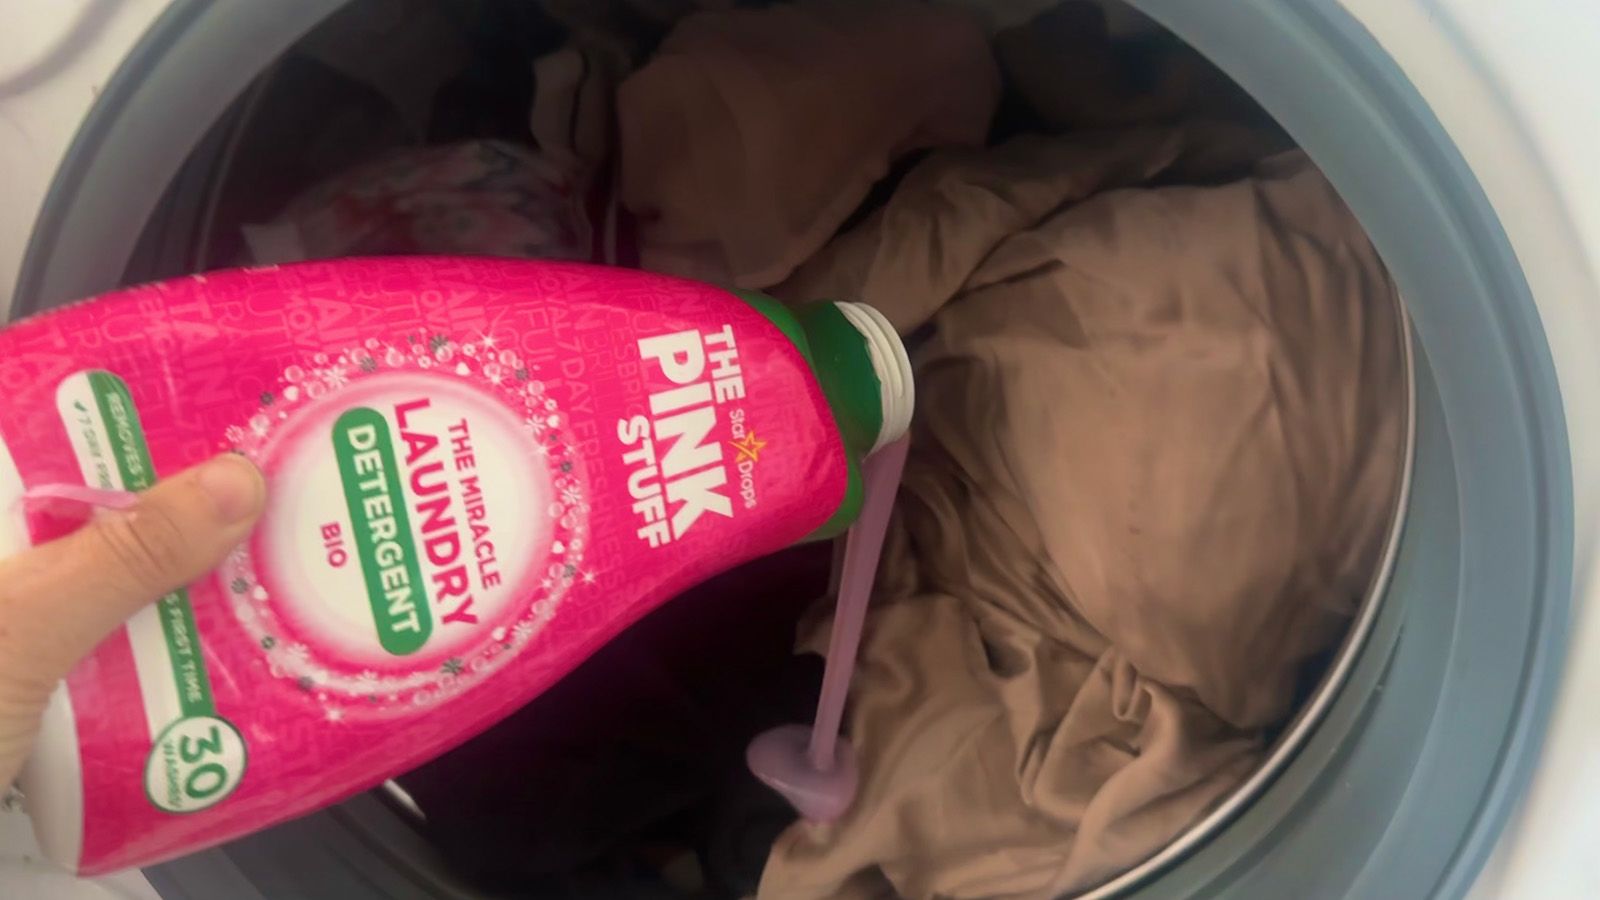 The Pink Stuff Everyday Laundry 5PK 1EA